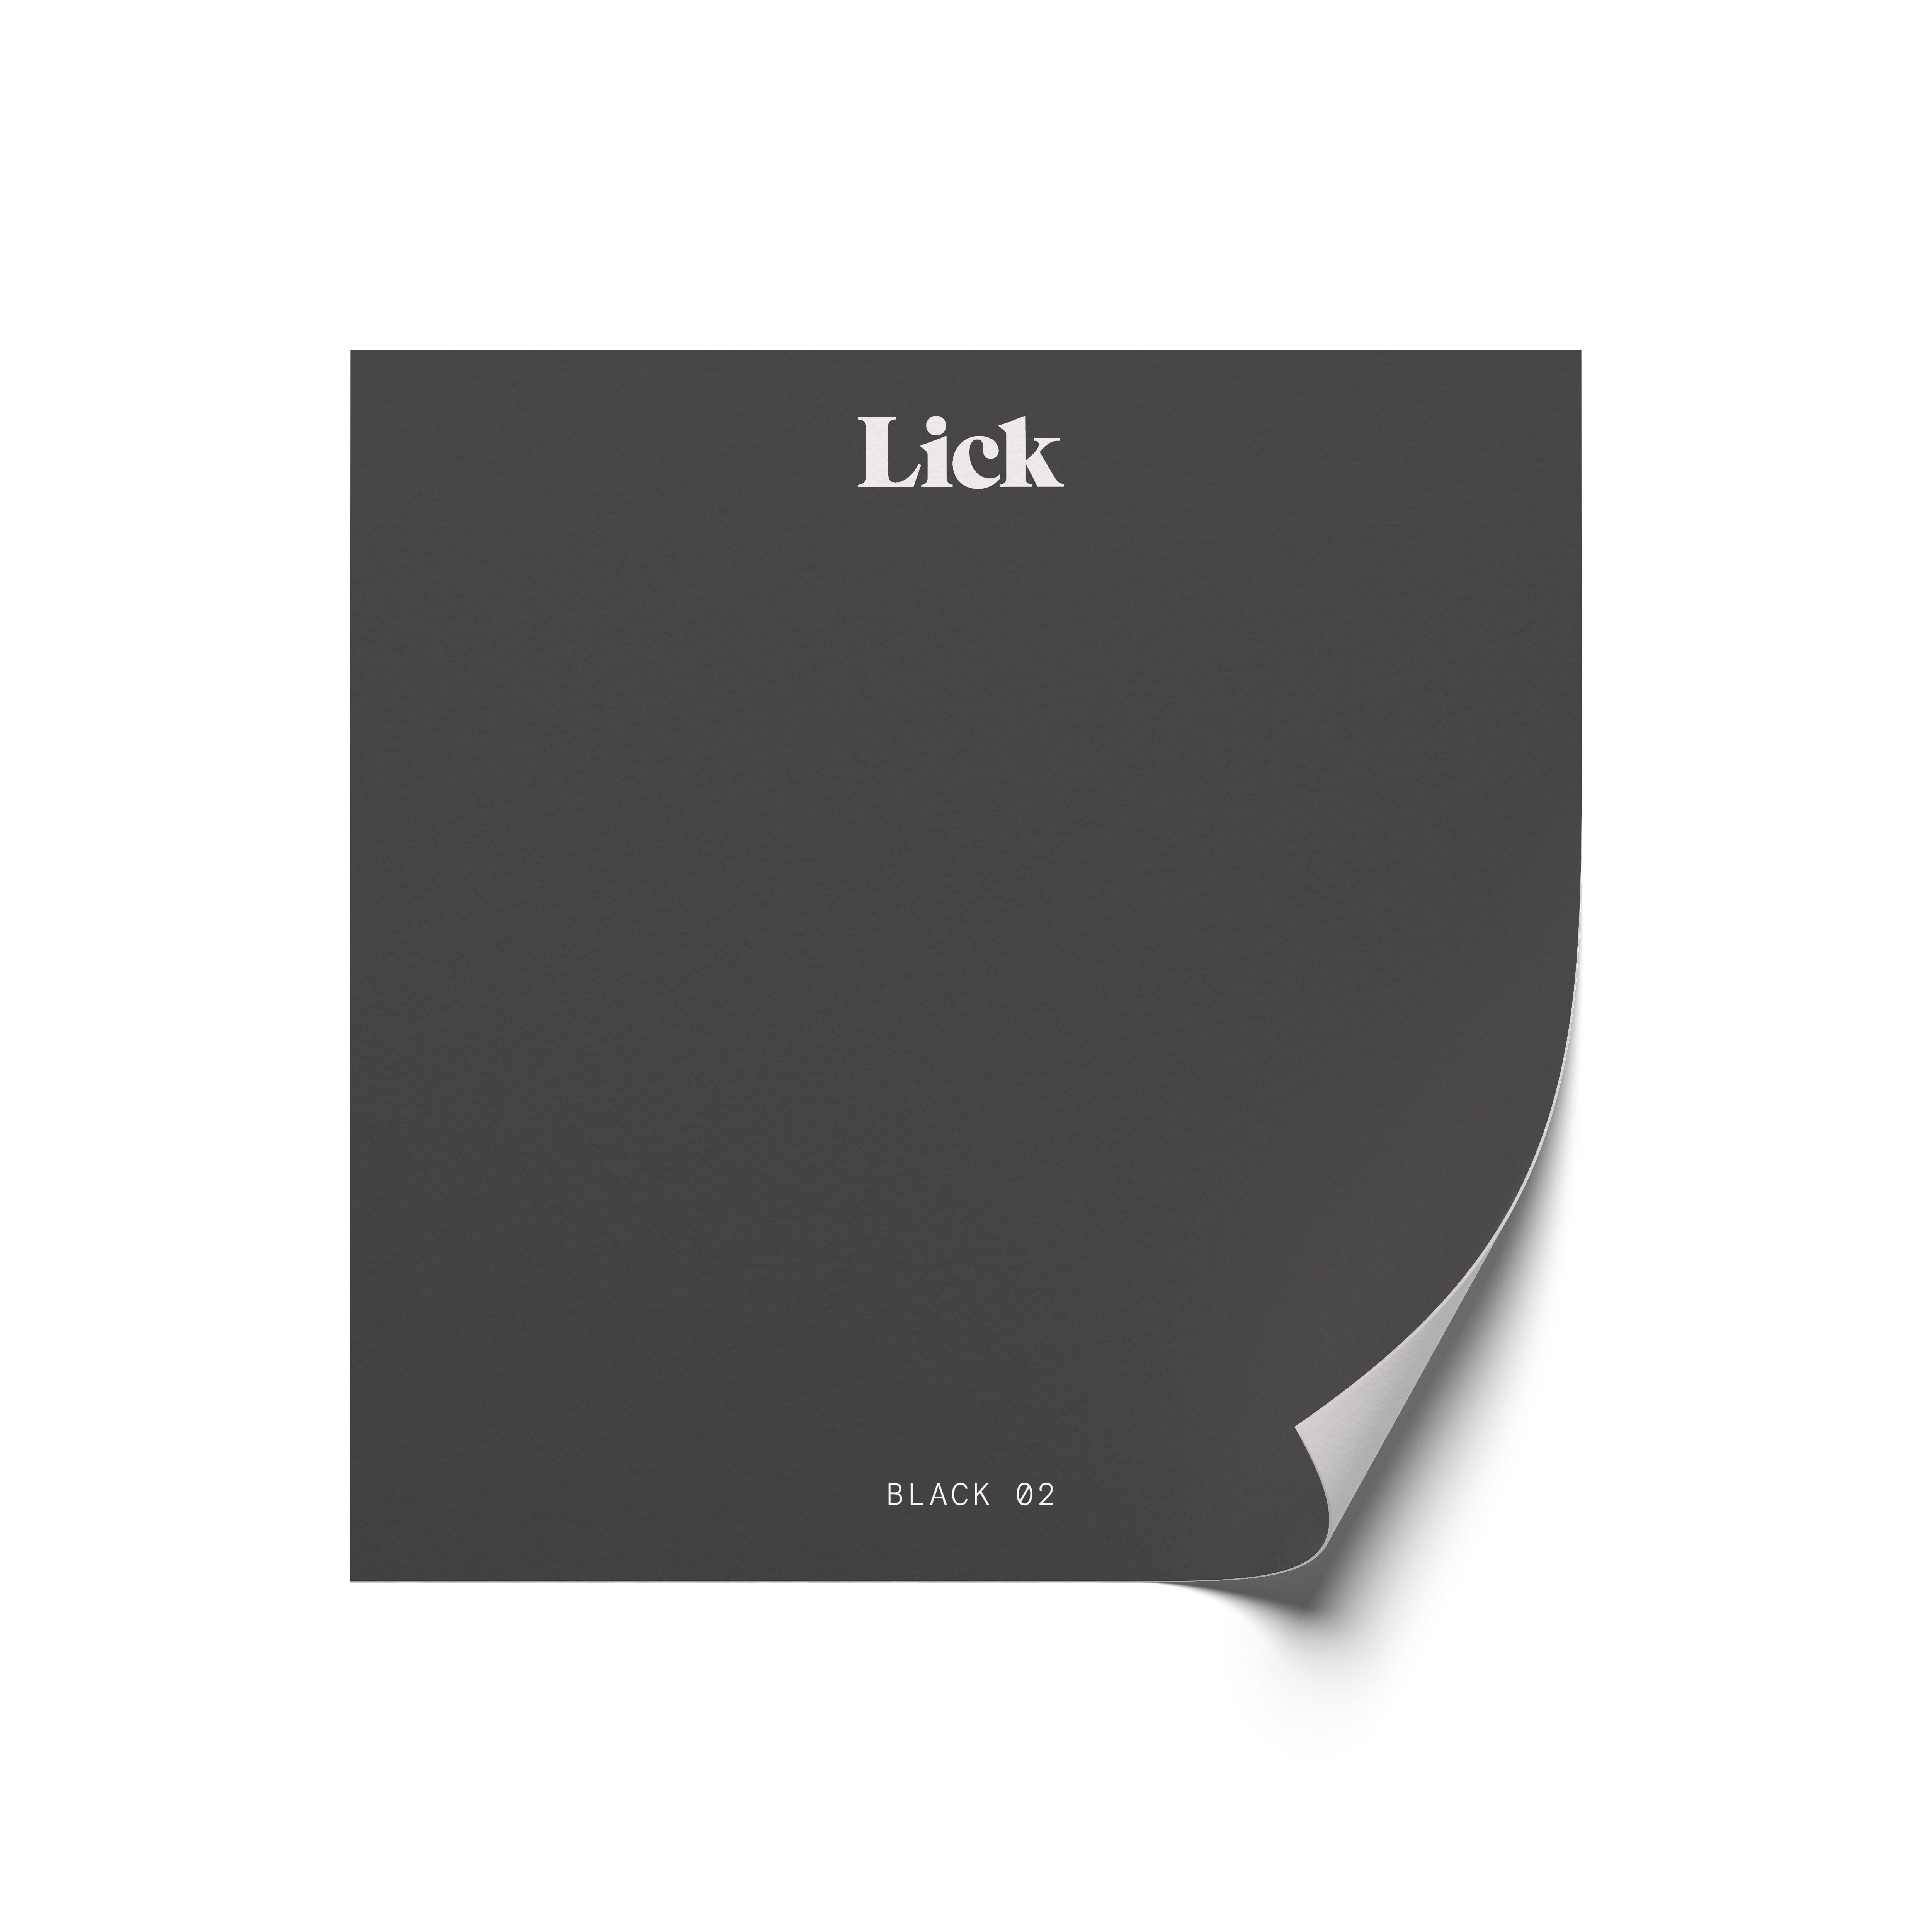 Lick Black 02 Peel & stick Tester